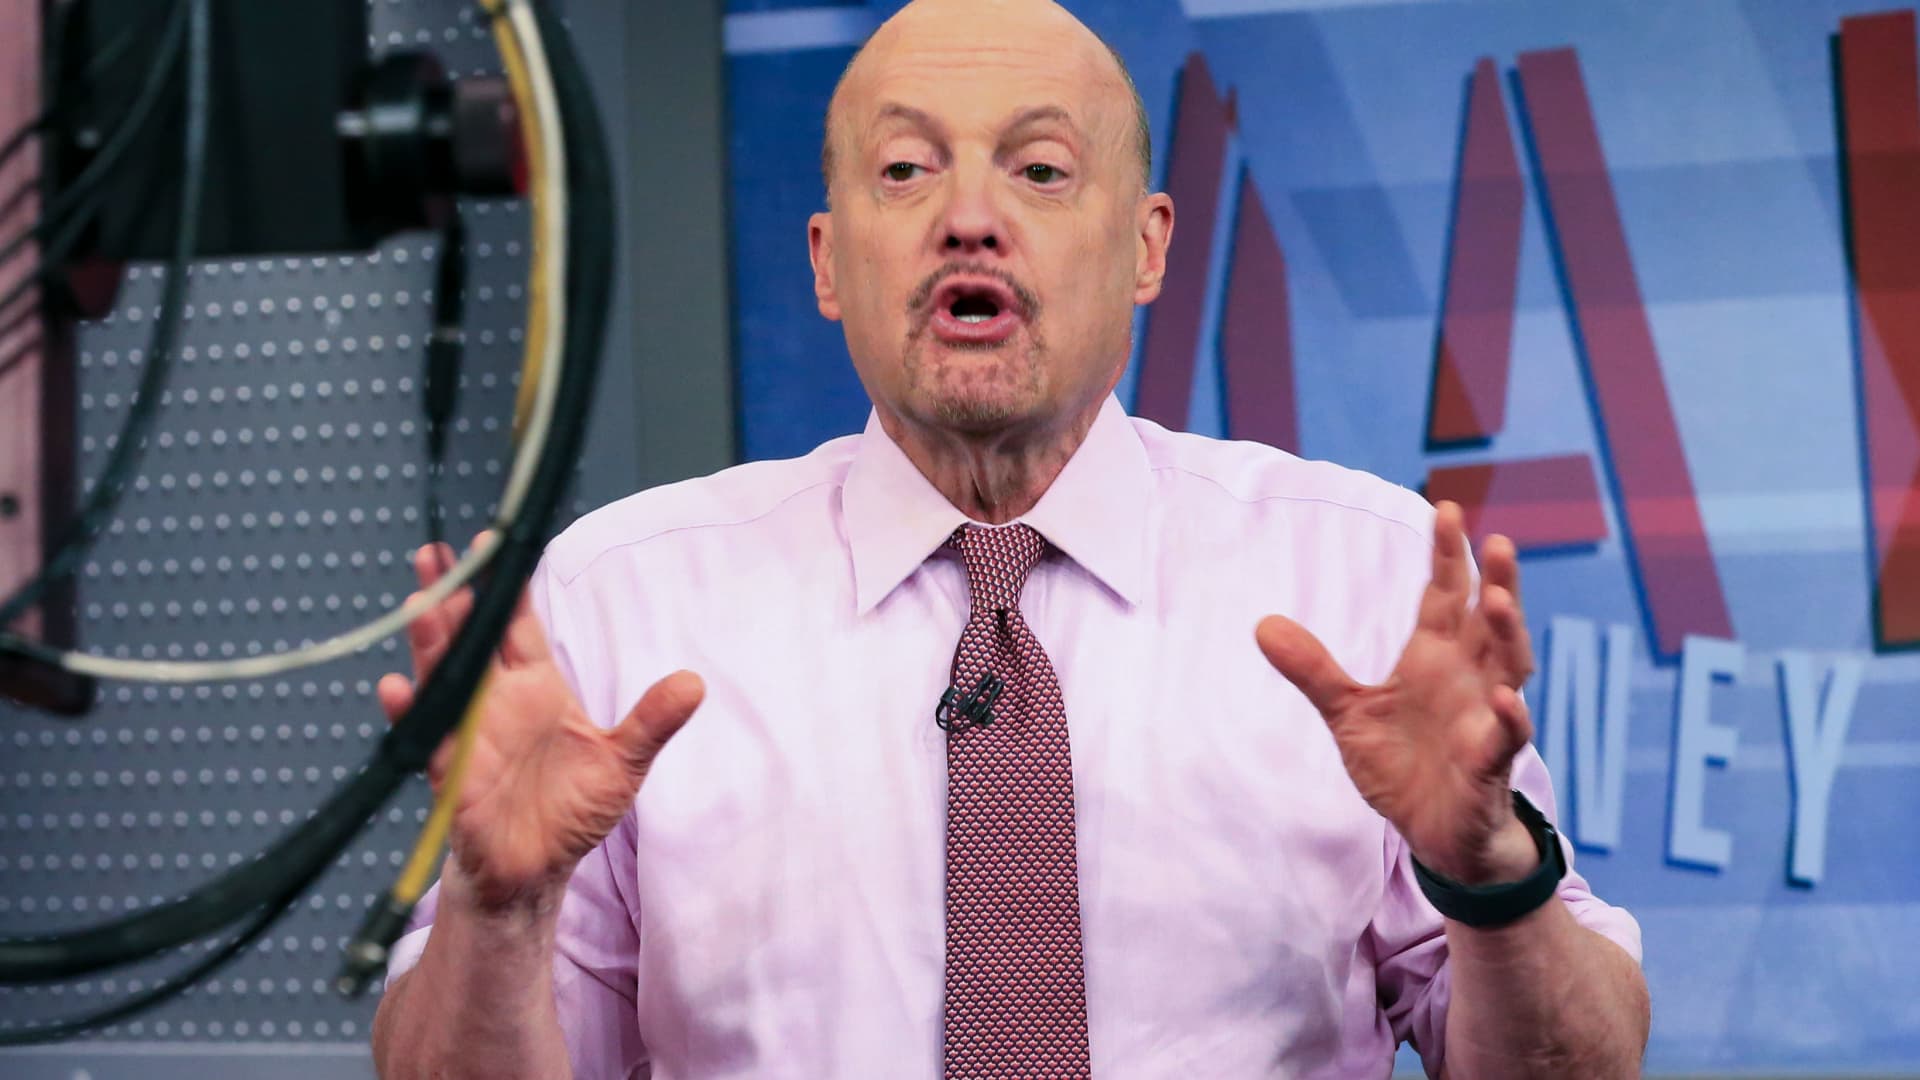 Jim Cramer says investors should eye these 5 downtrodden stocks